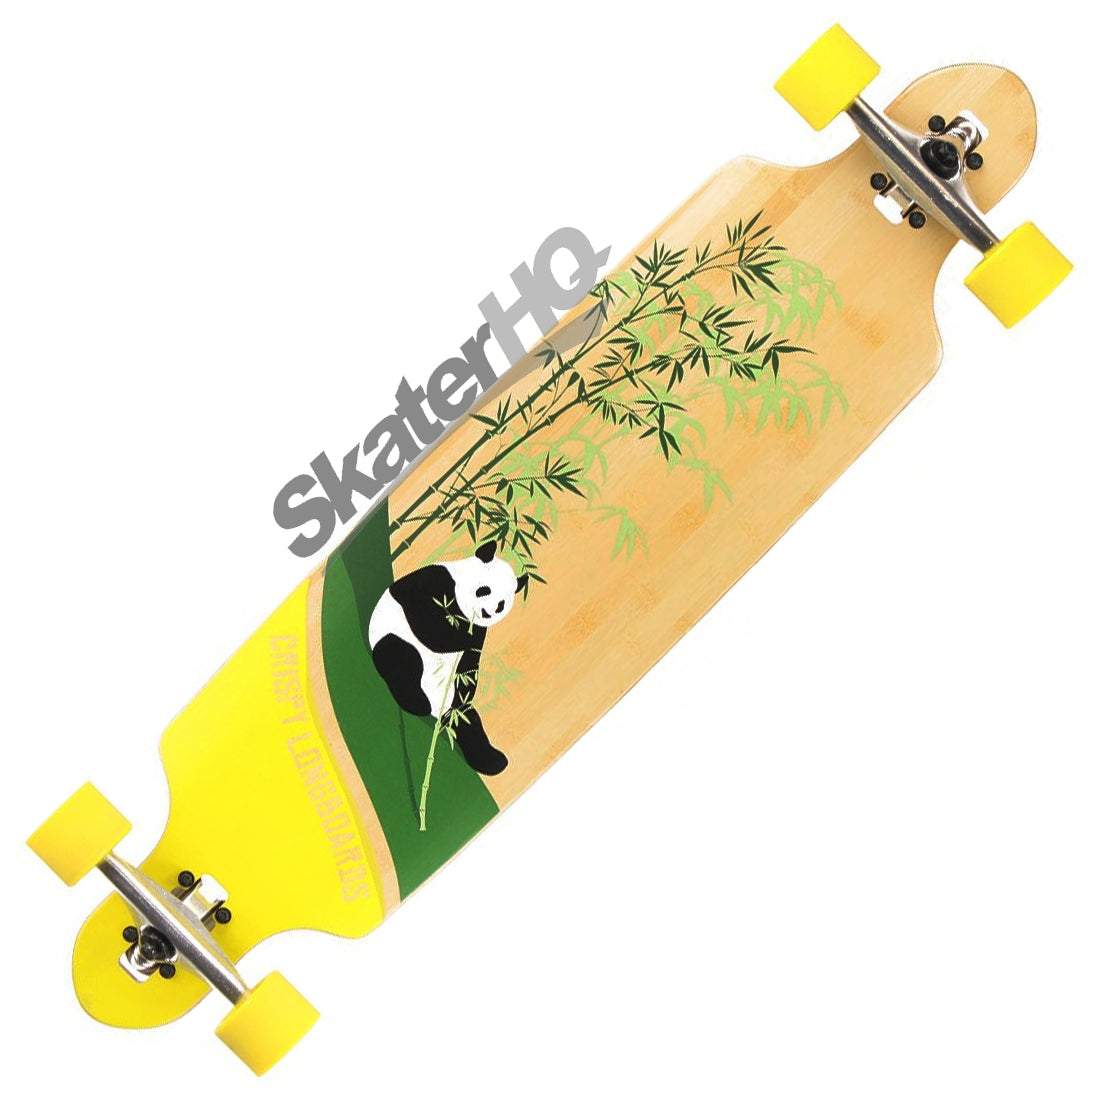 Crispy Drop Thru 41 Complete - Yellow Skateboard Completes Longboards